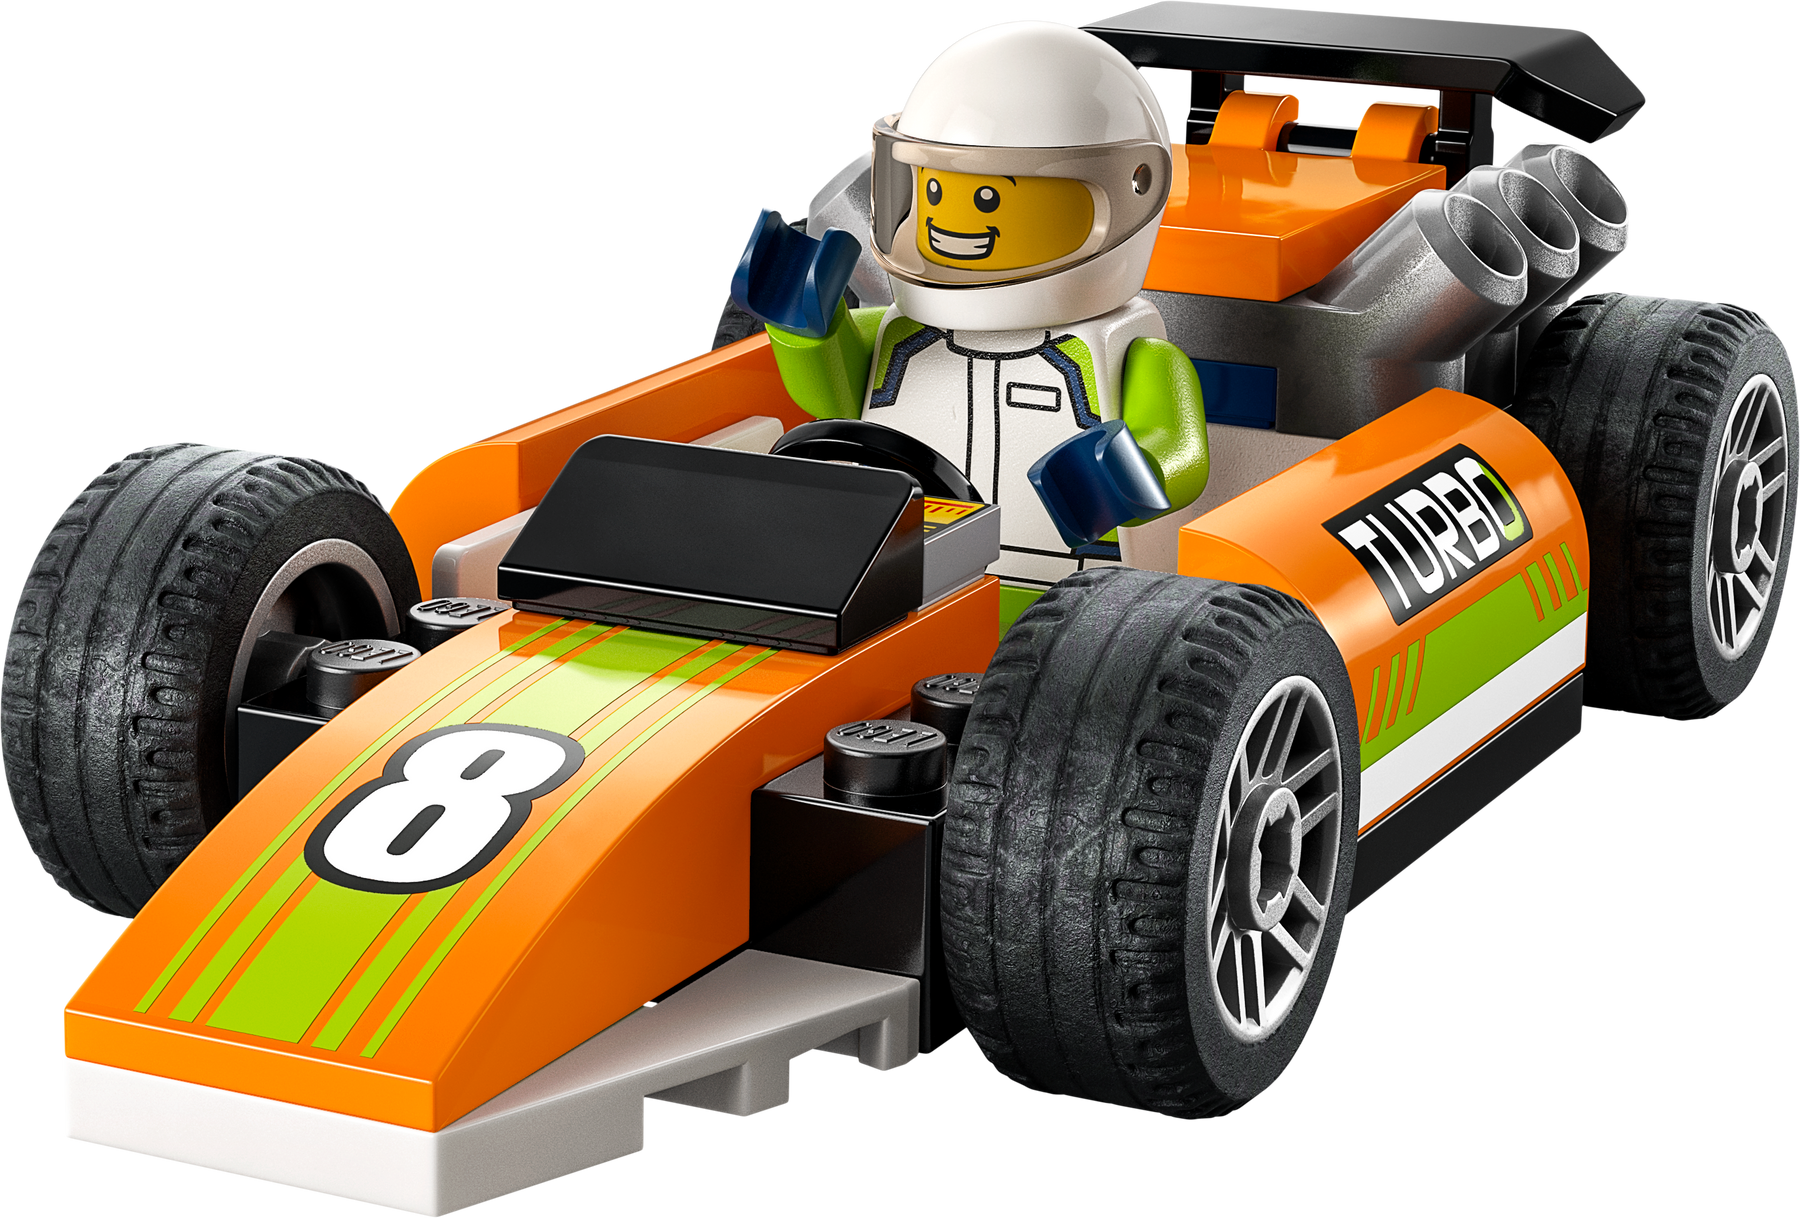 Coche De Carreras De Juguete F1 Lego City